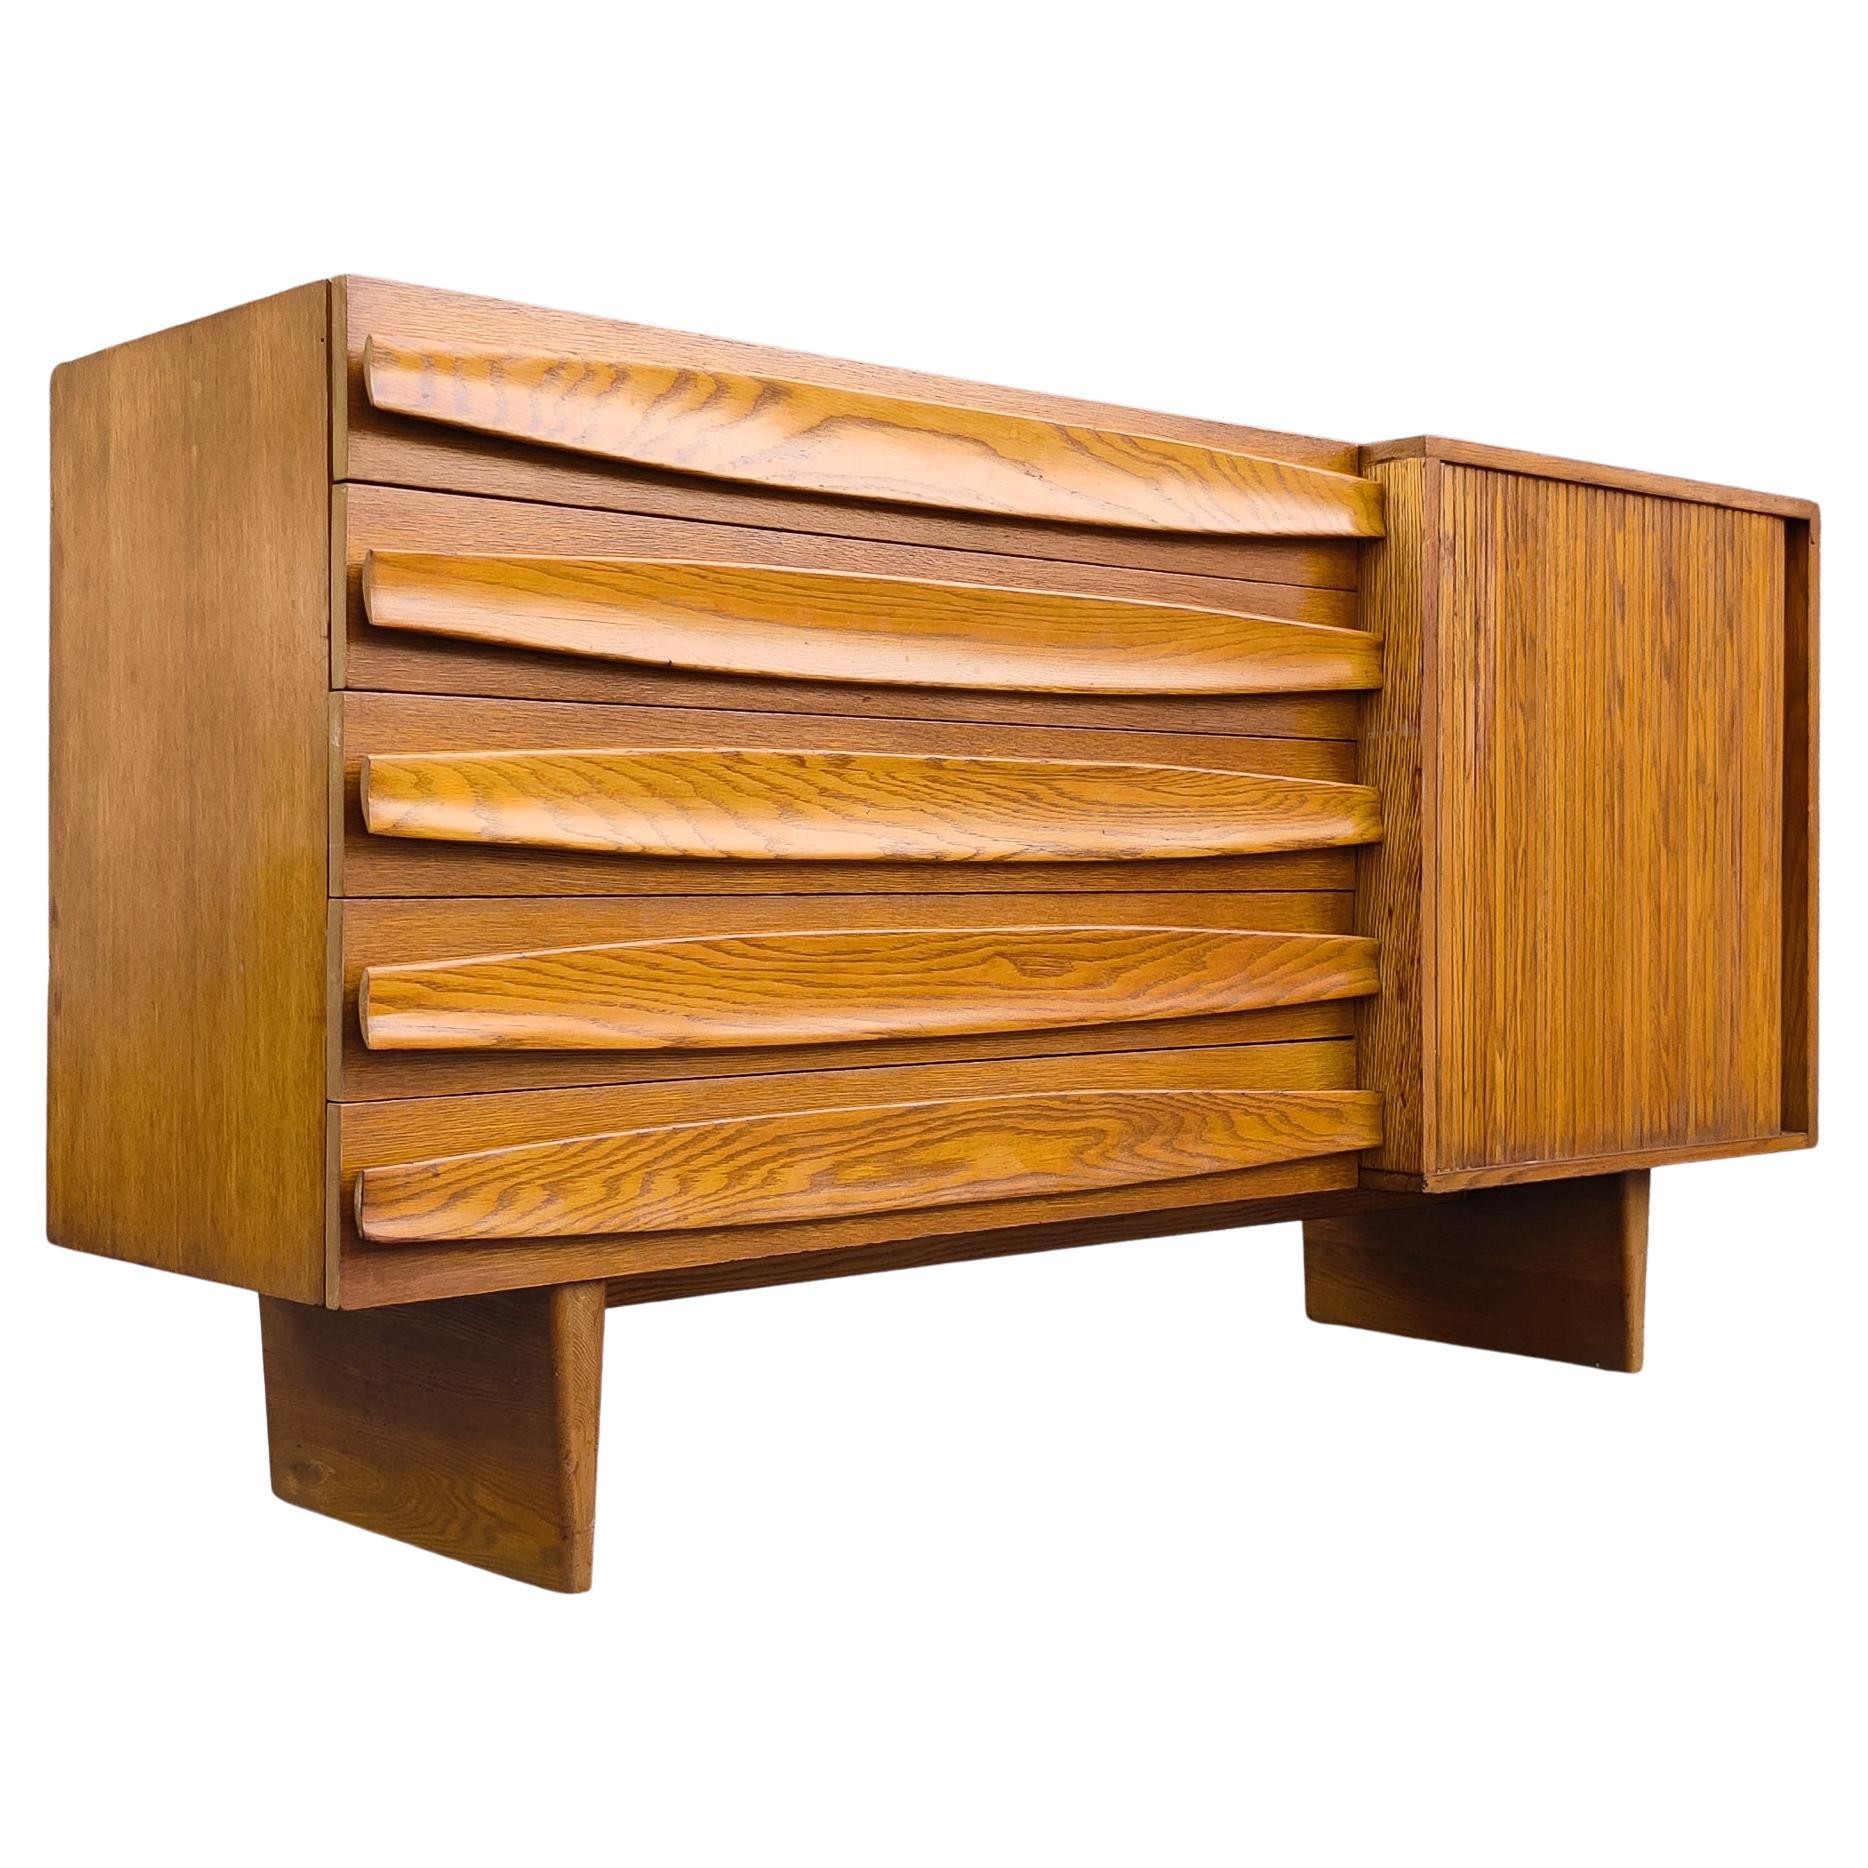 Harold Schwartz Romweber Oak Tambour Cabinet, Sculptural & Architectural 1950s For Sale